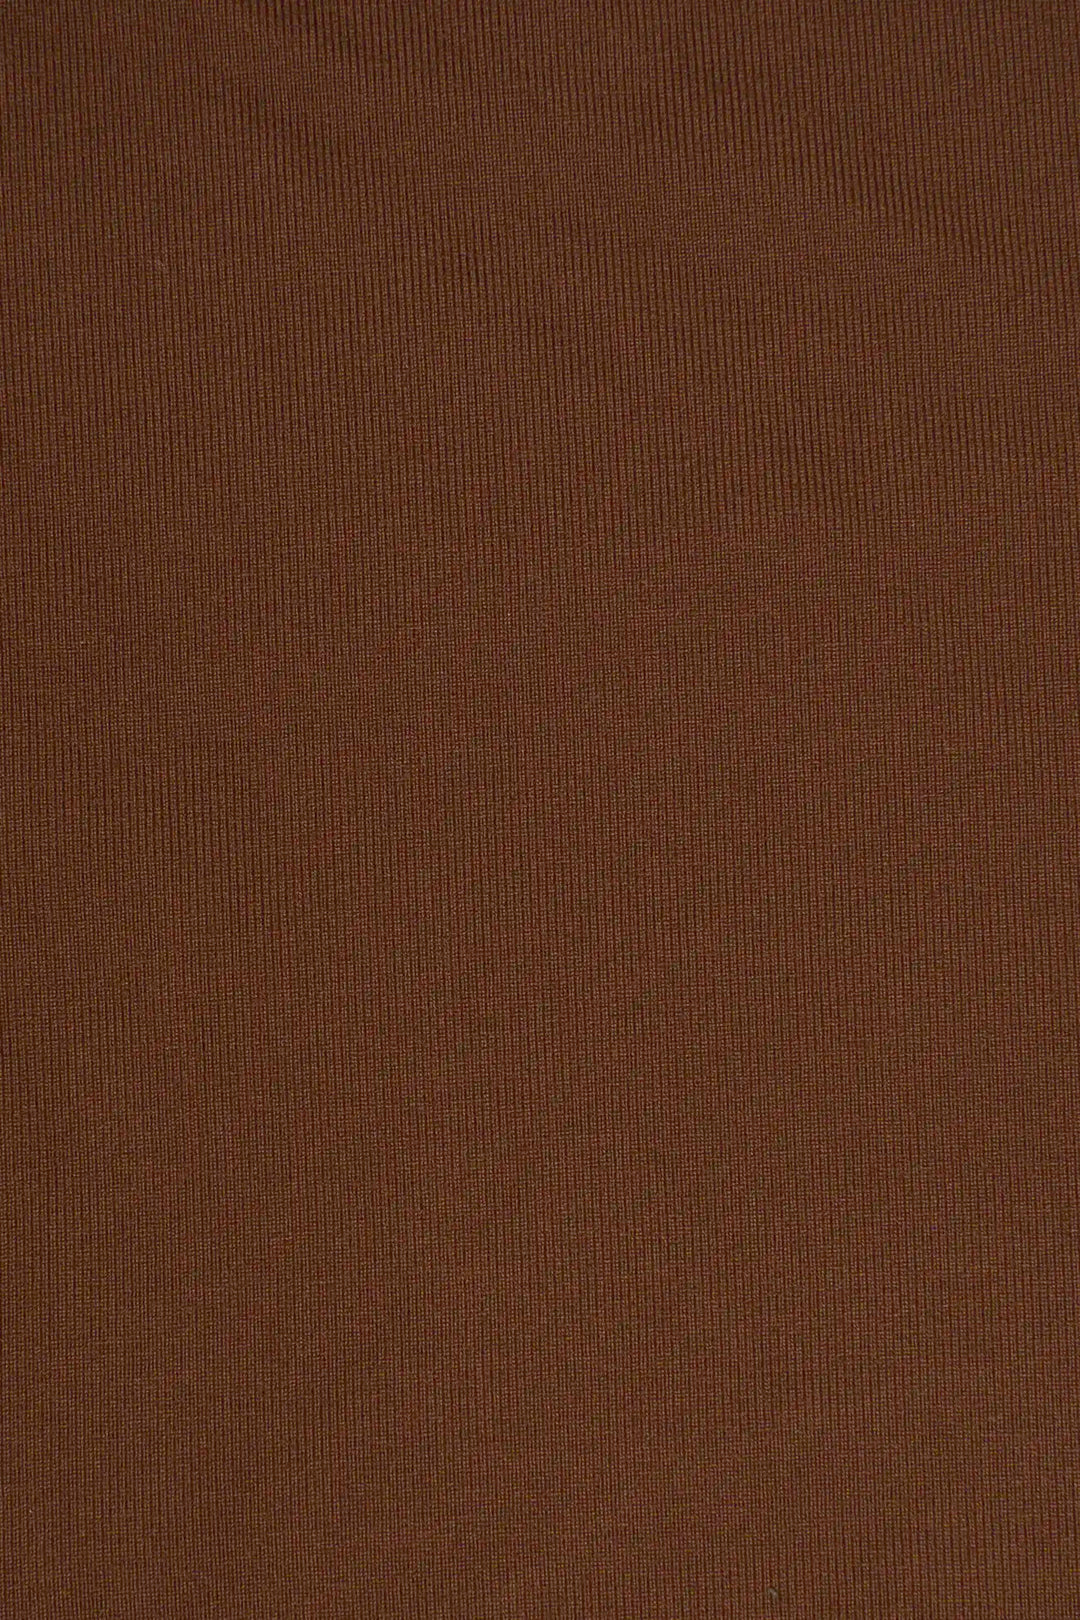 Brown Nylon Spandex Stretch Fabric